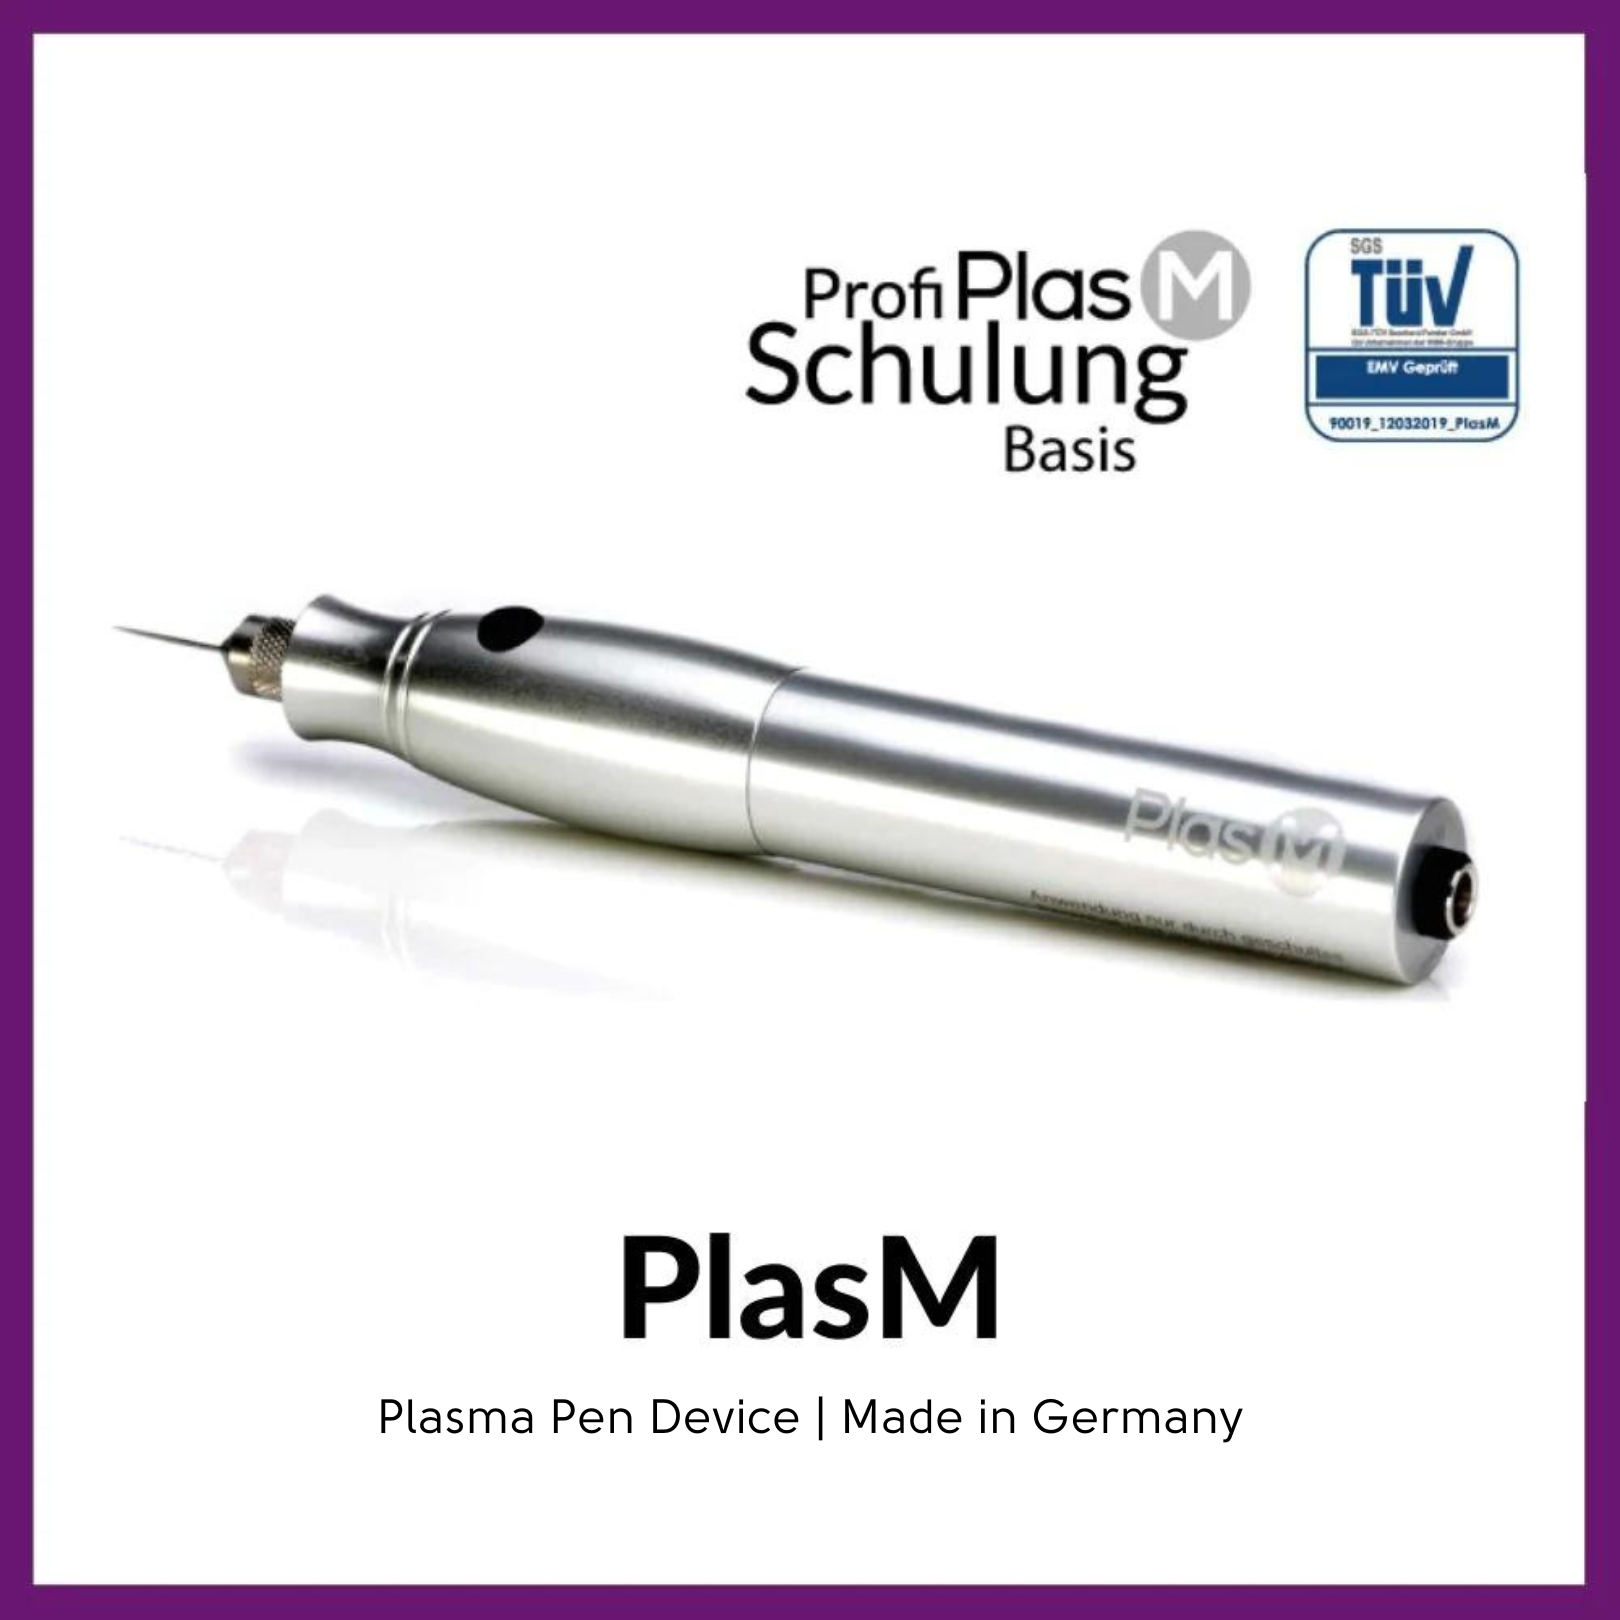 PlasM – Plasma Pen Device